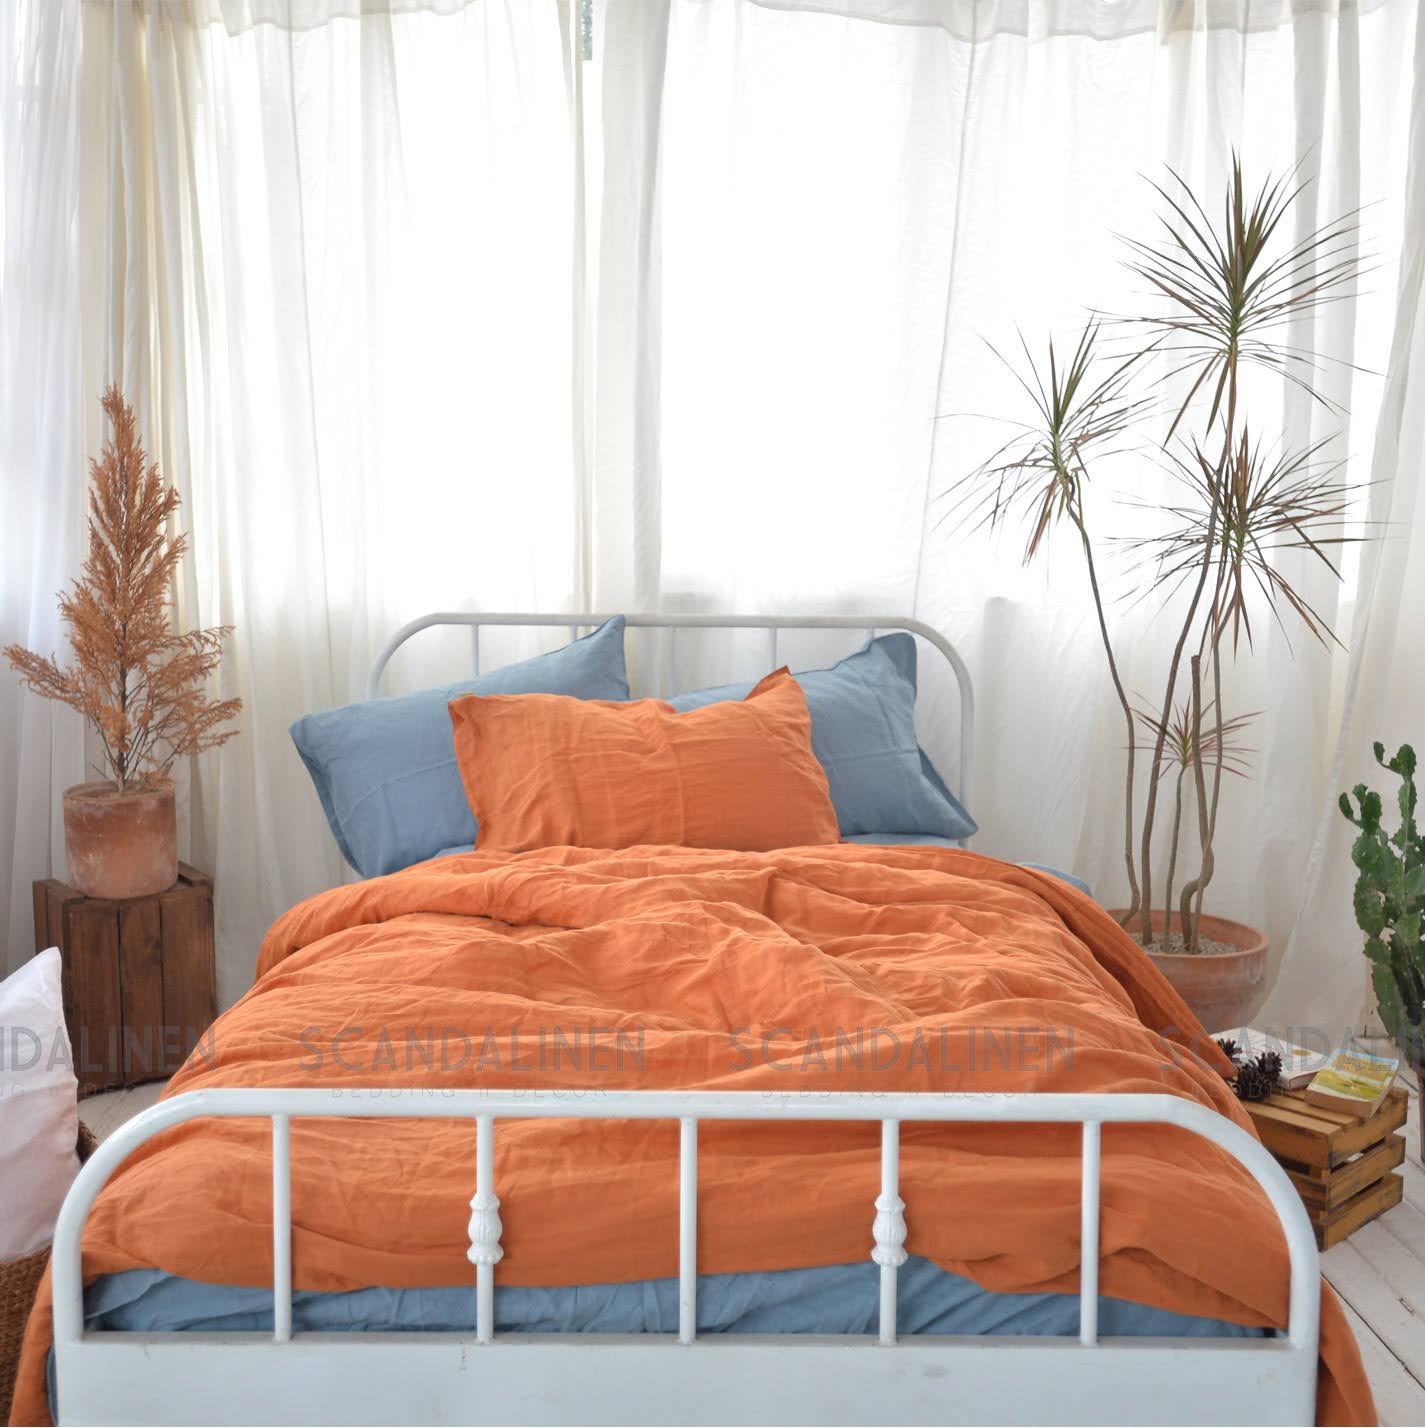 Orange French Linen Duvet Sheet Set (4 pieces) - Plain Dyeing